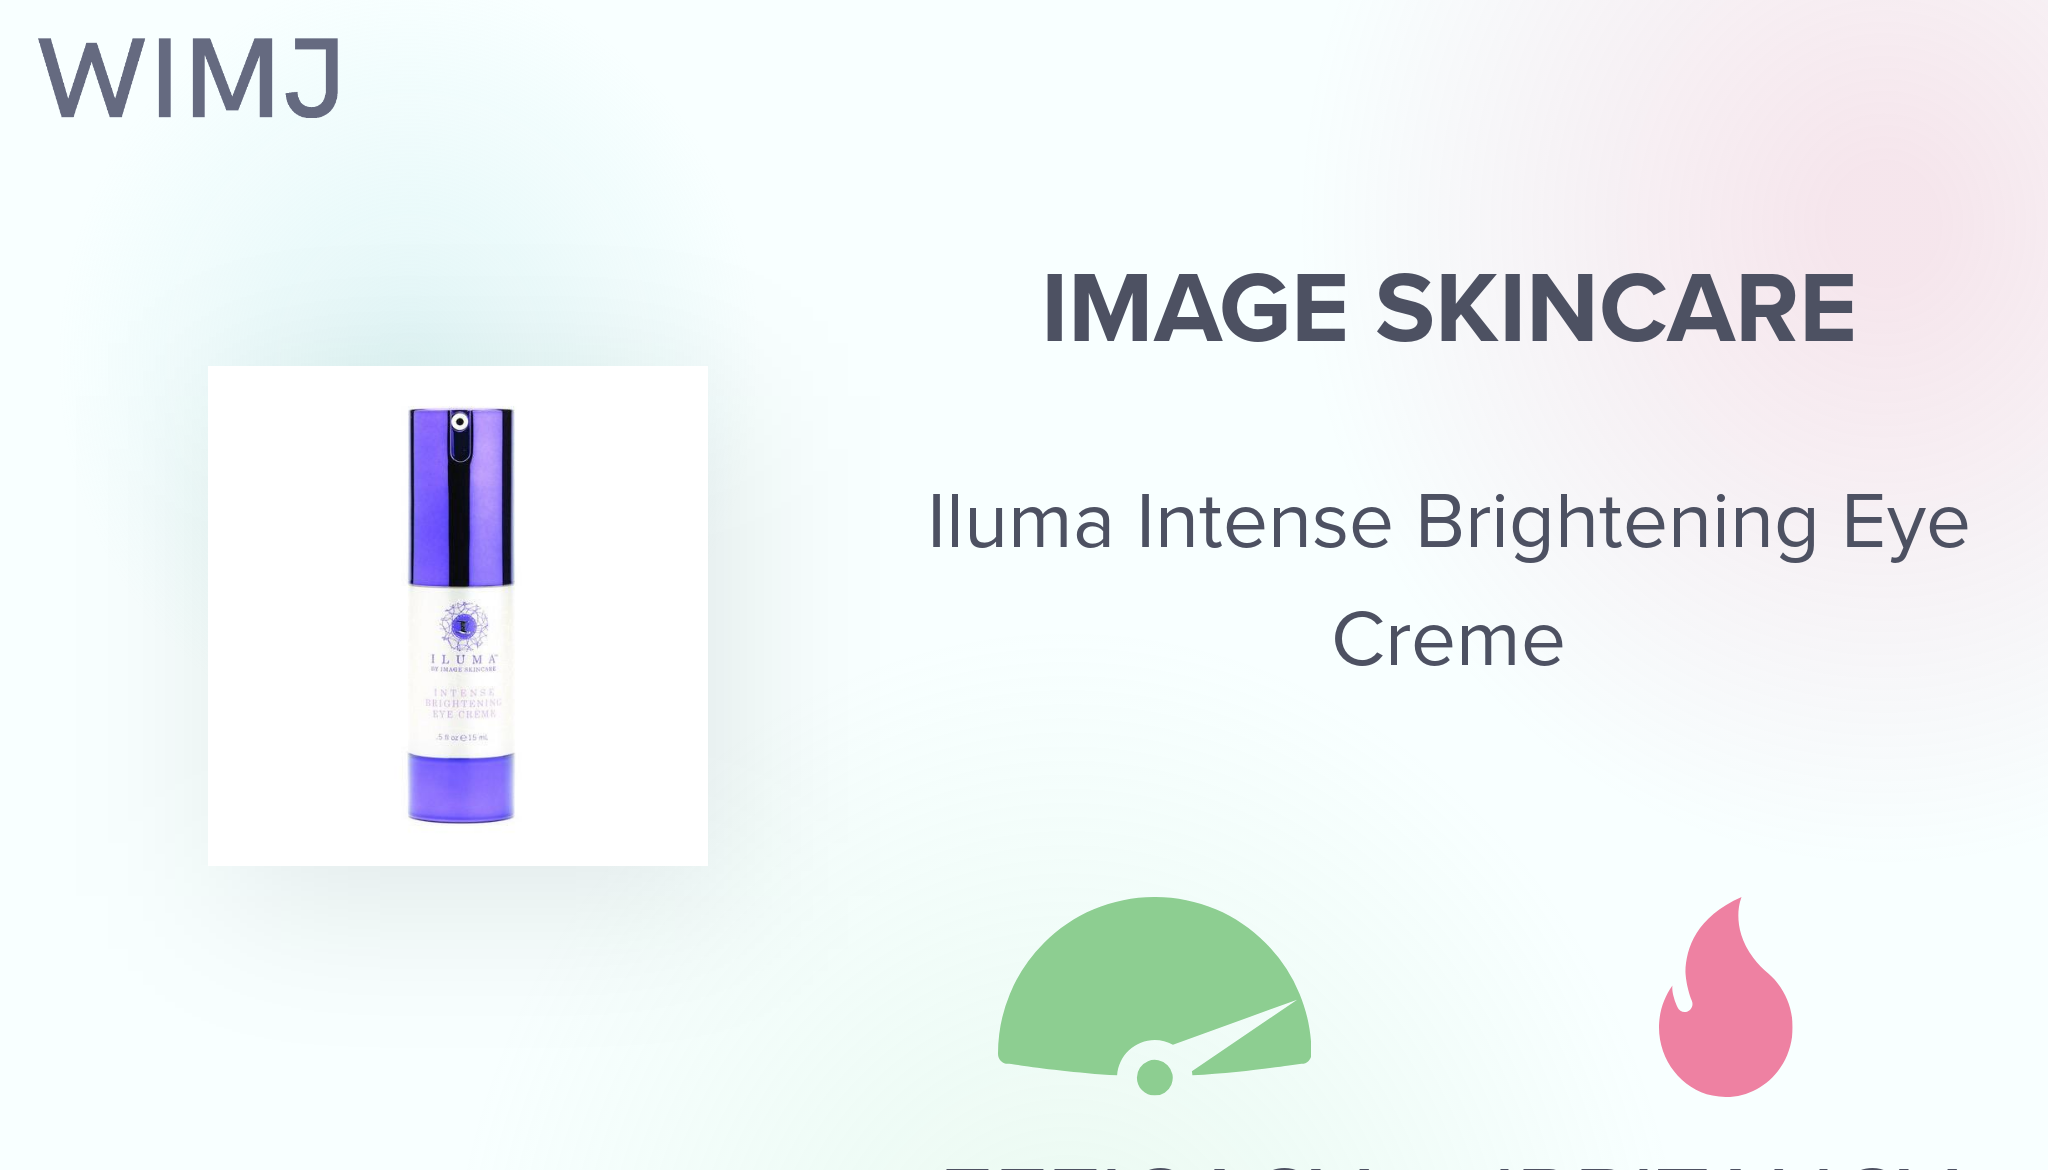 Review: Image skincare - Iluma Intense Brightening Eye Creme - WIMJ